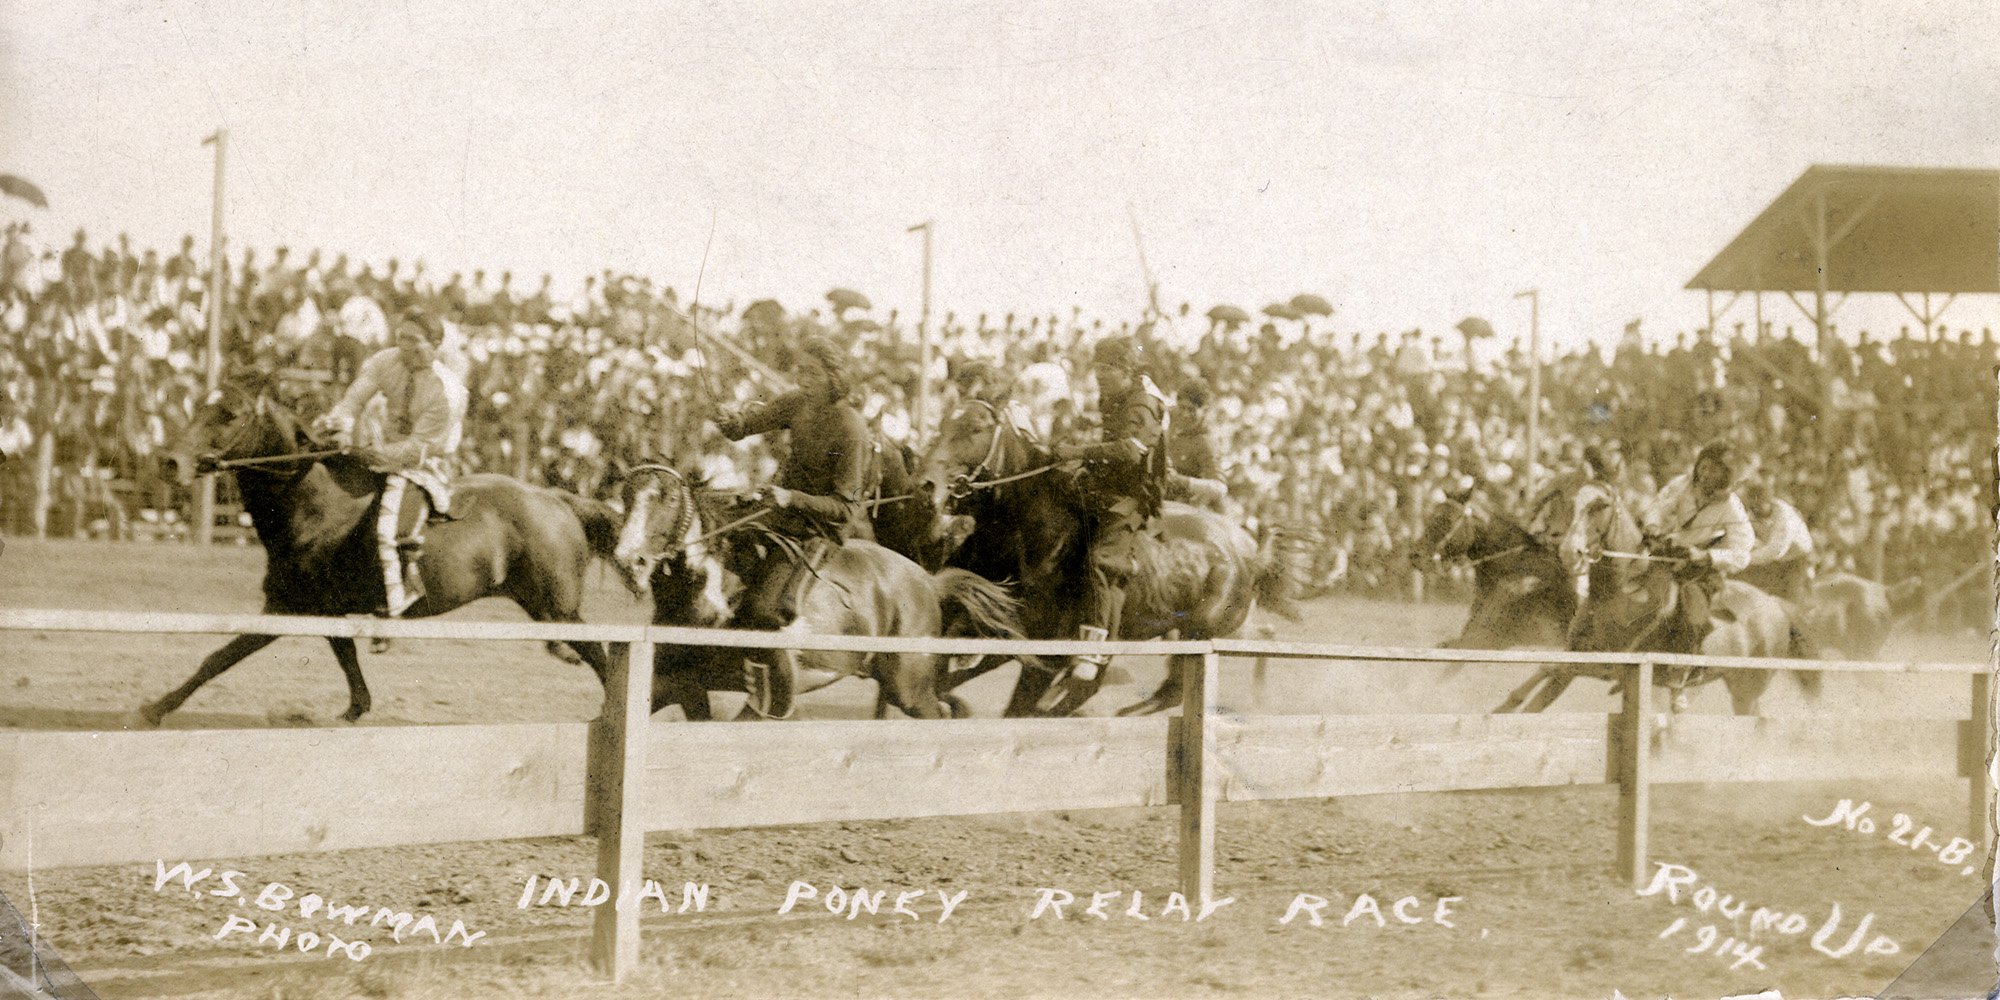 Indian pony relay race, 1914.